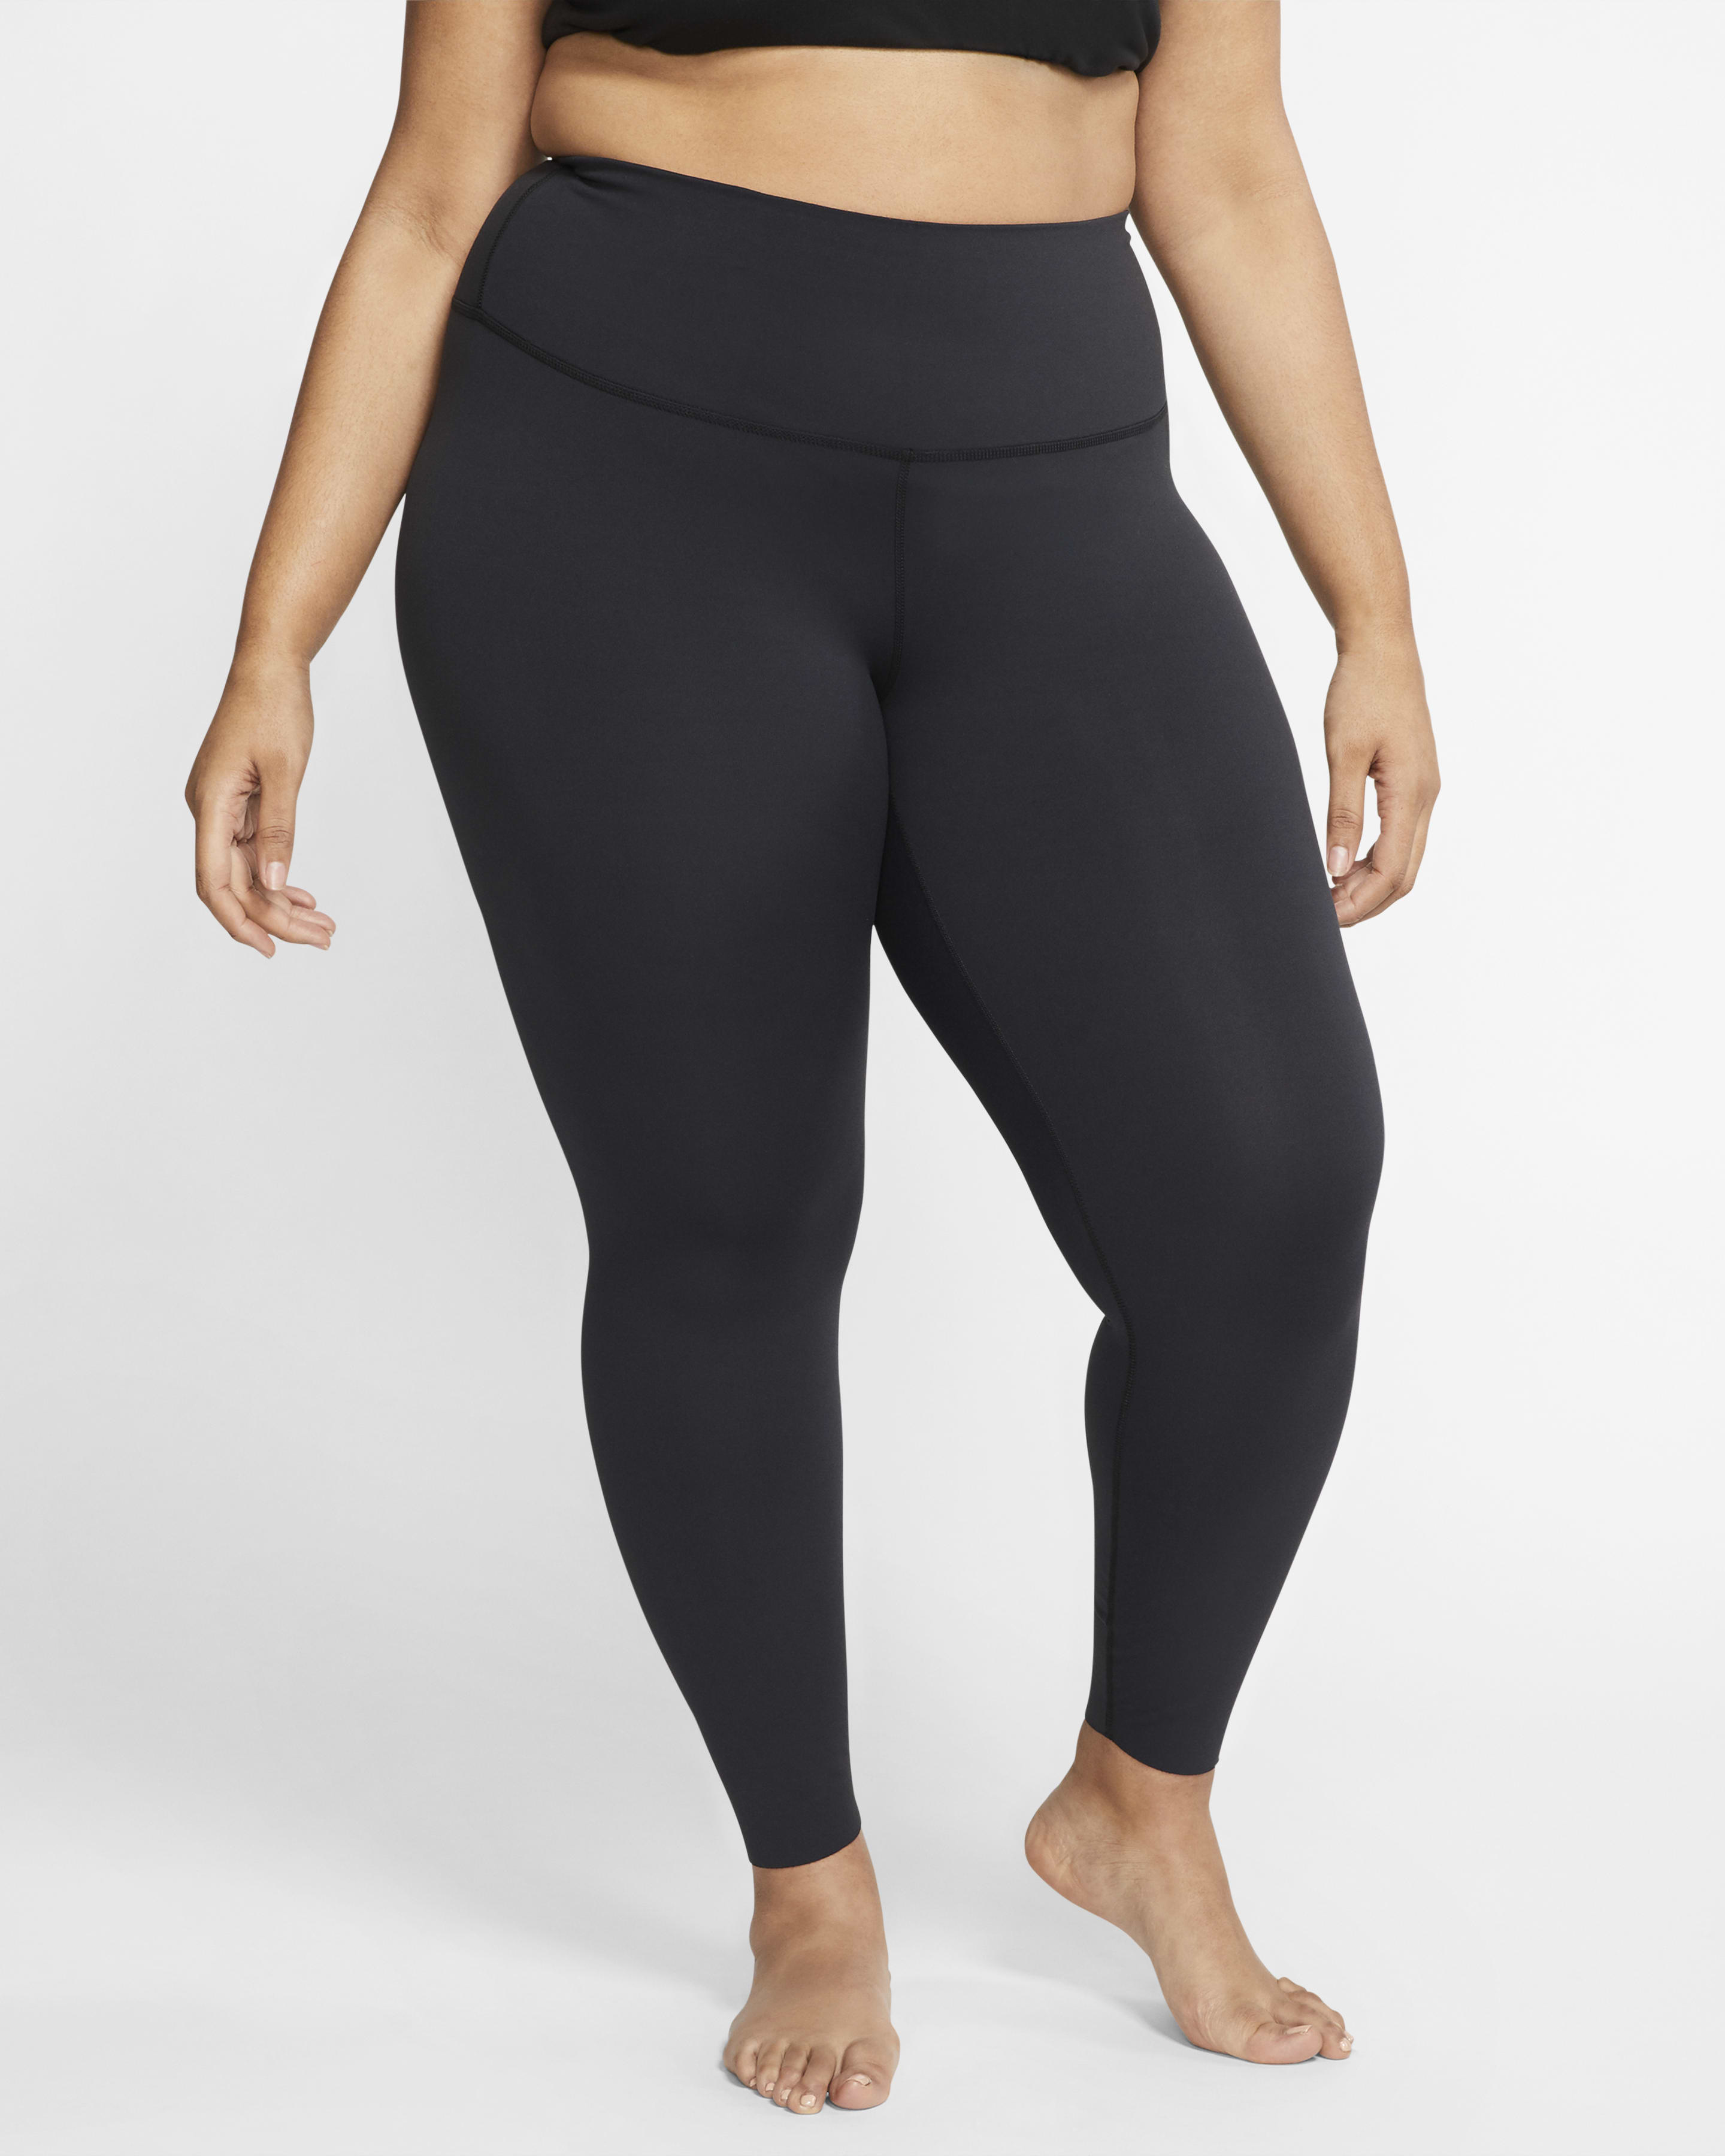 Plus Size Yoga Pants & Exercise Pants| Taking Shape NZ